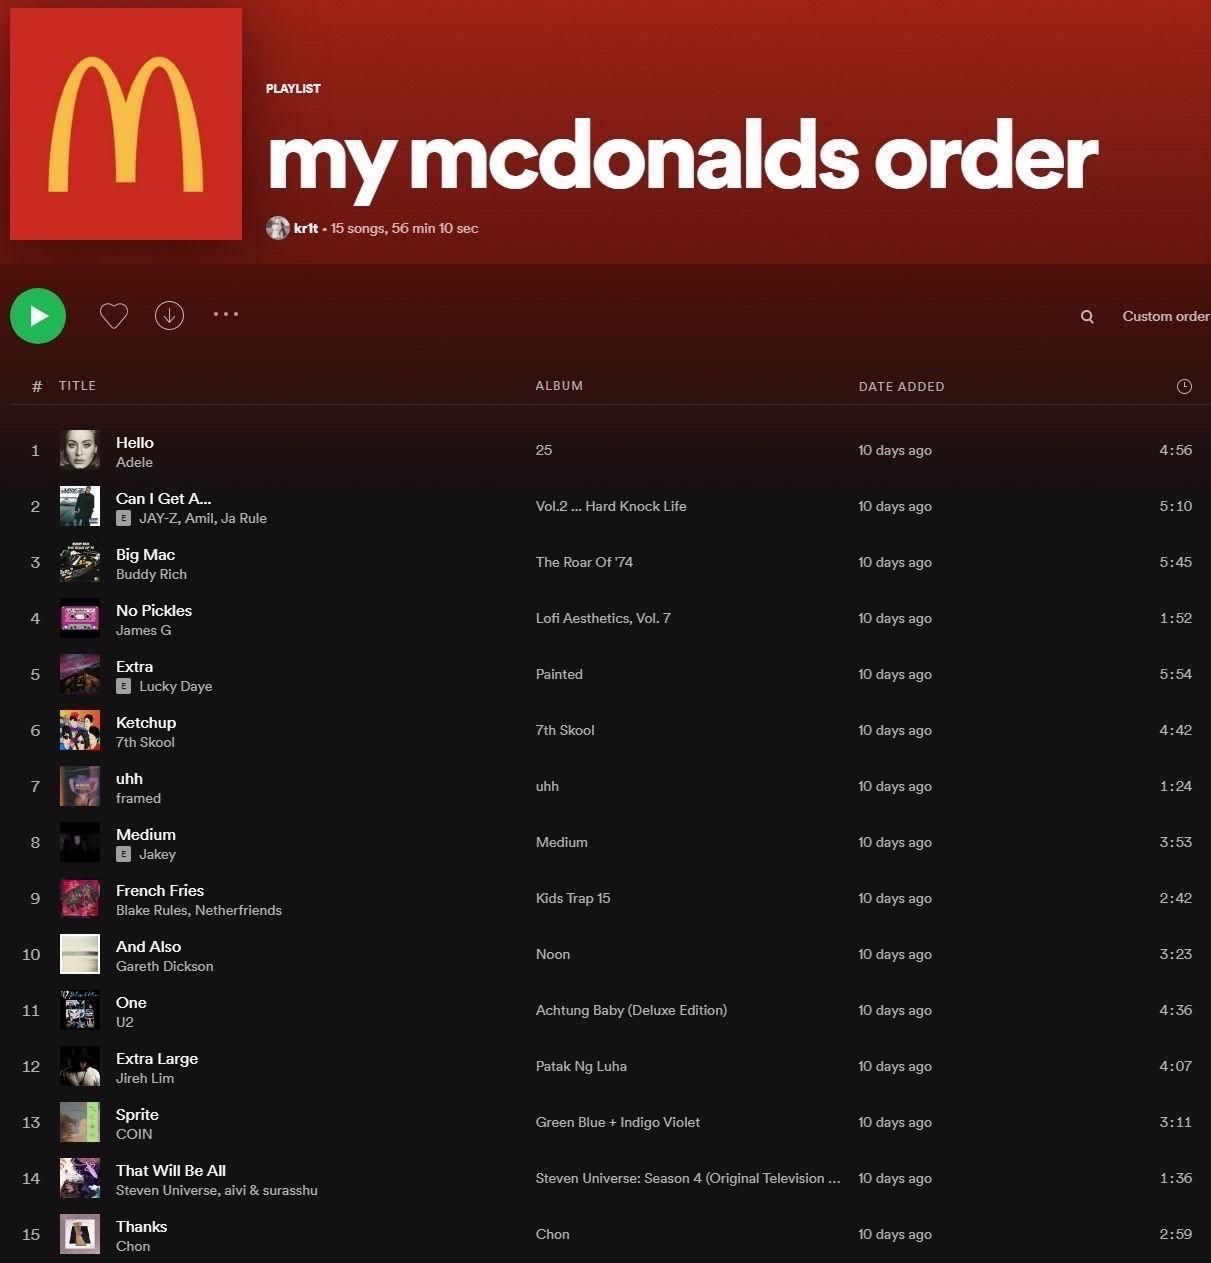 My Mcdonalds order